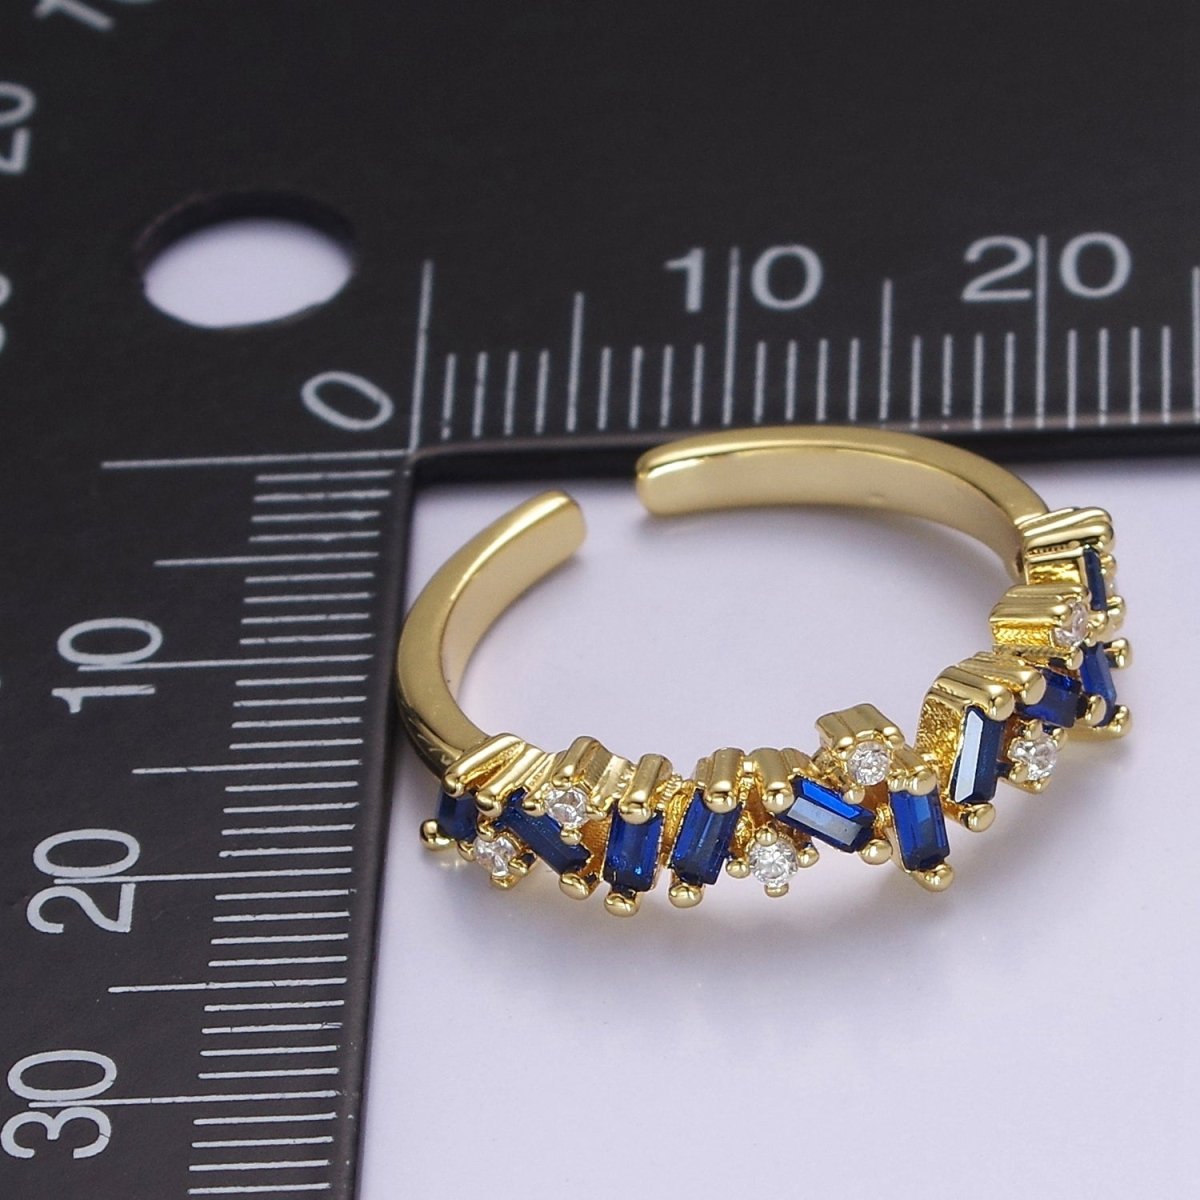 Irregular Baguette Color Stone Half Eternity Stackable Ring Stacking Gold Filled Bands Open Adjustable Ring O-2095 ~ O-2100 - DLUXCA